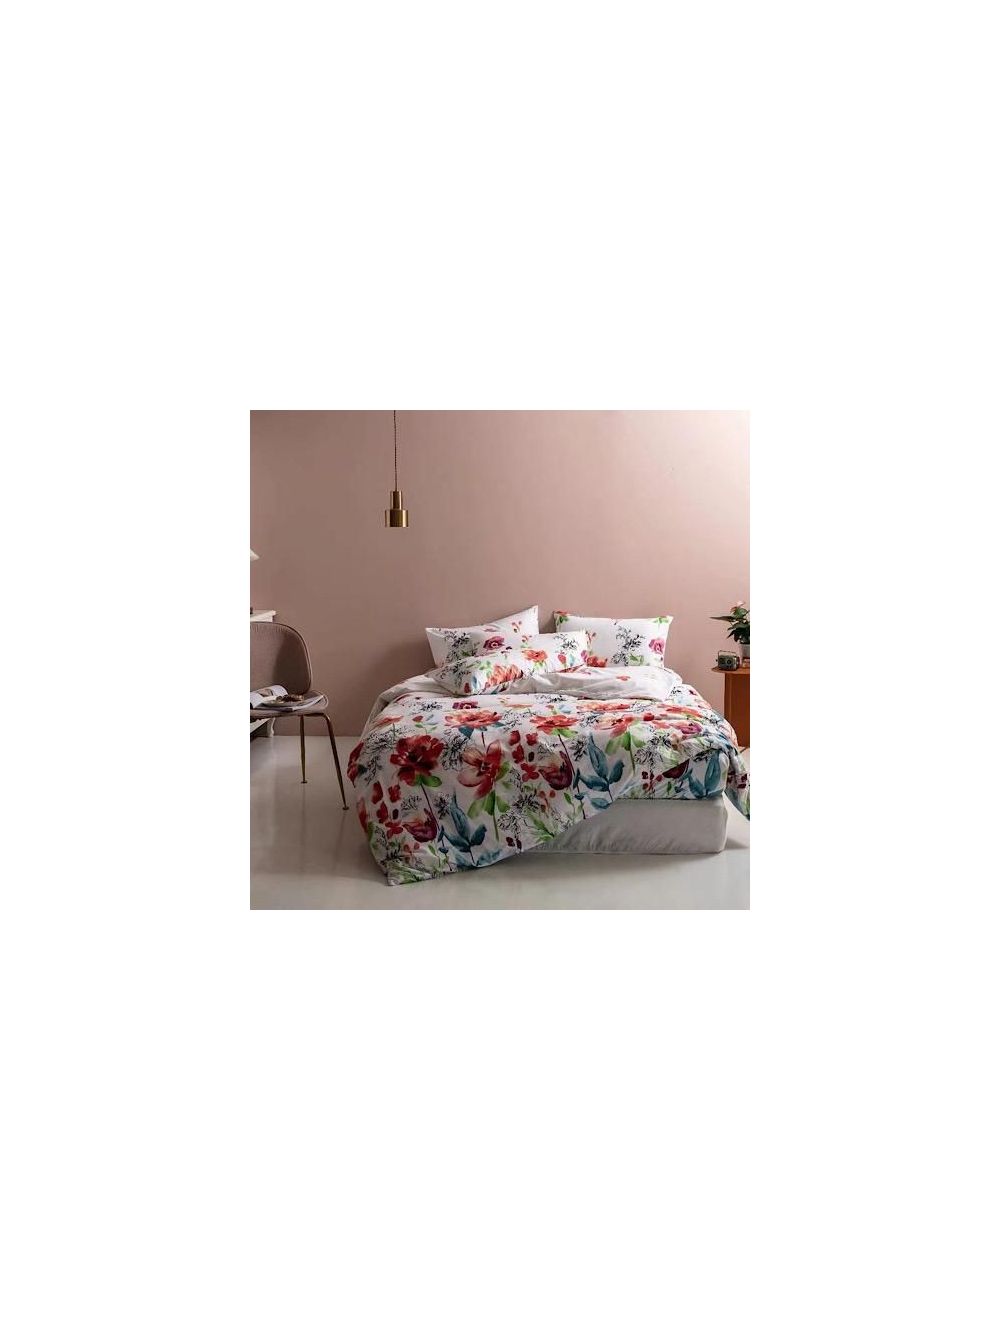 DEALS FOR LESS - Queen/double Size, Duvet Cover, Bedding Set Of 6 Pieces,  Floral Design, 1 Duvet Cover + 1 Bedsheet + 4 Pillow Covers.-hzaa2-07d